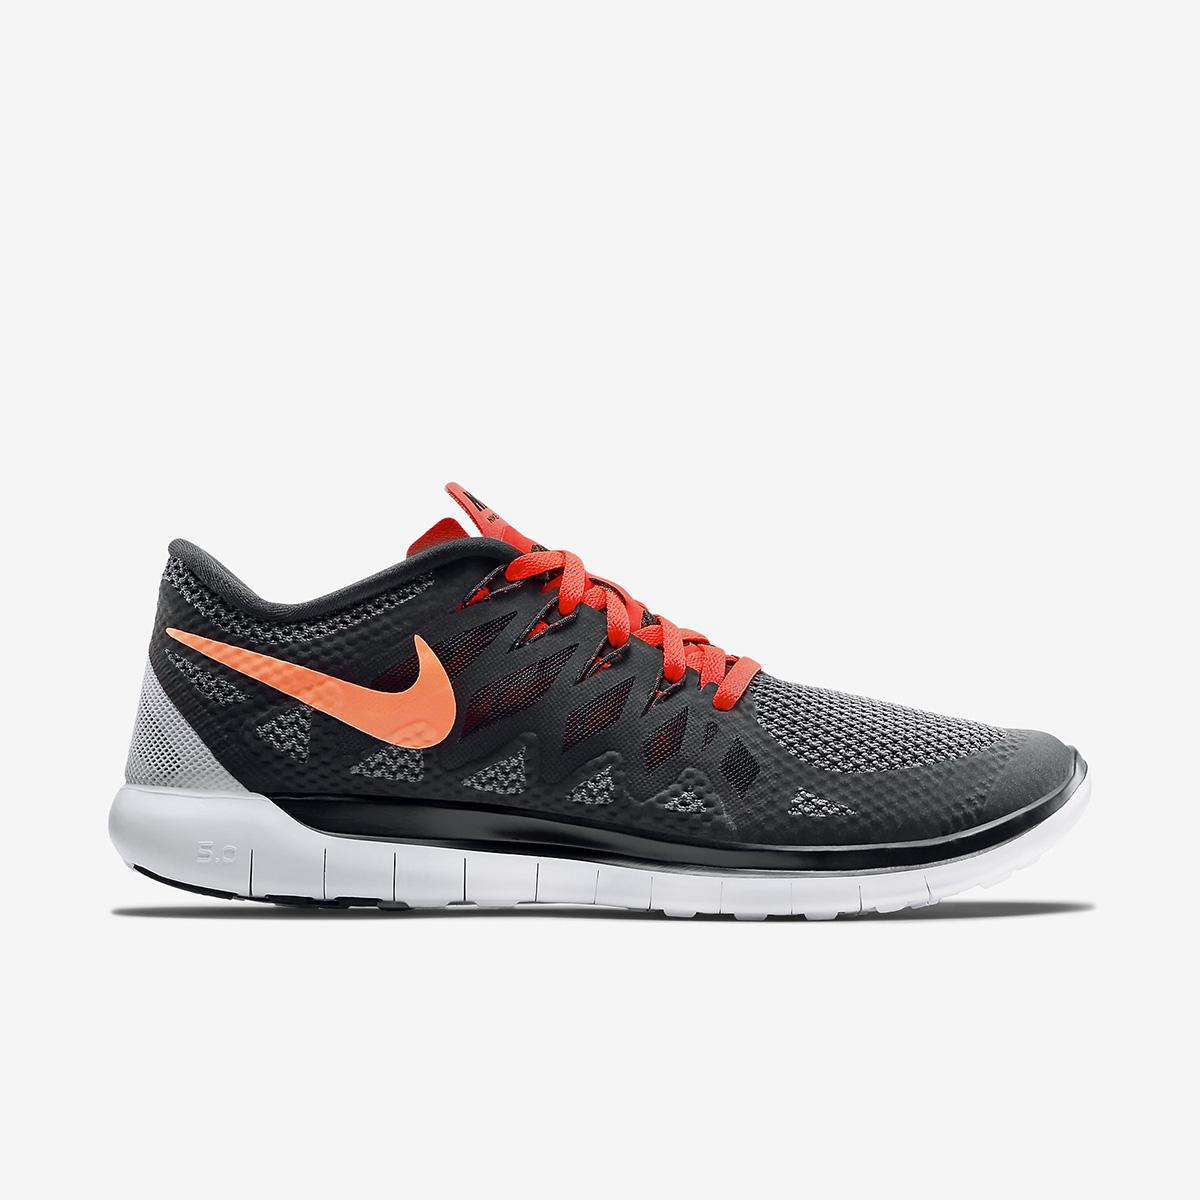 Nike Mens Free 5.0+ Running Shoes - Black/Bright Crimson - Tennisnuts.com